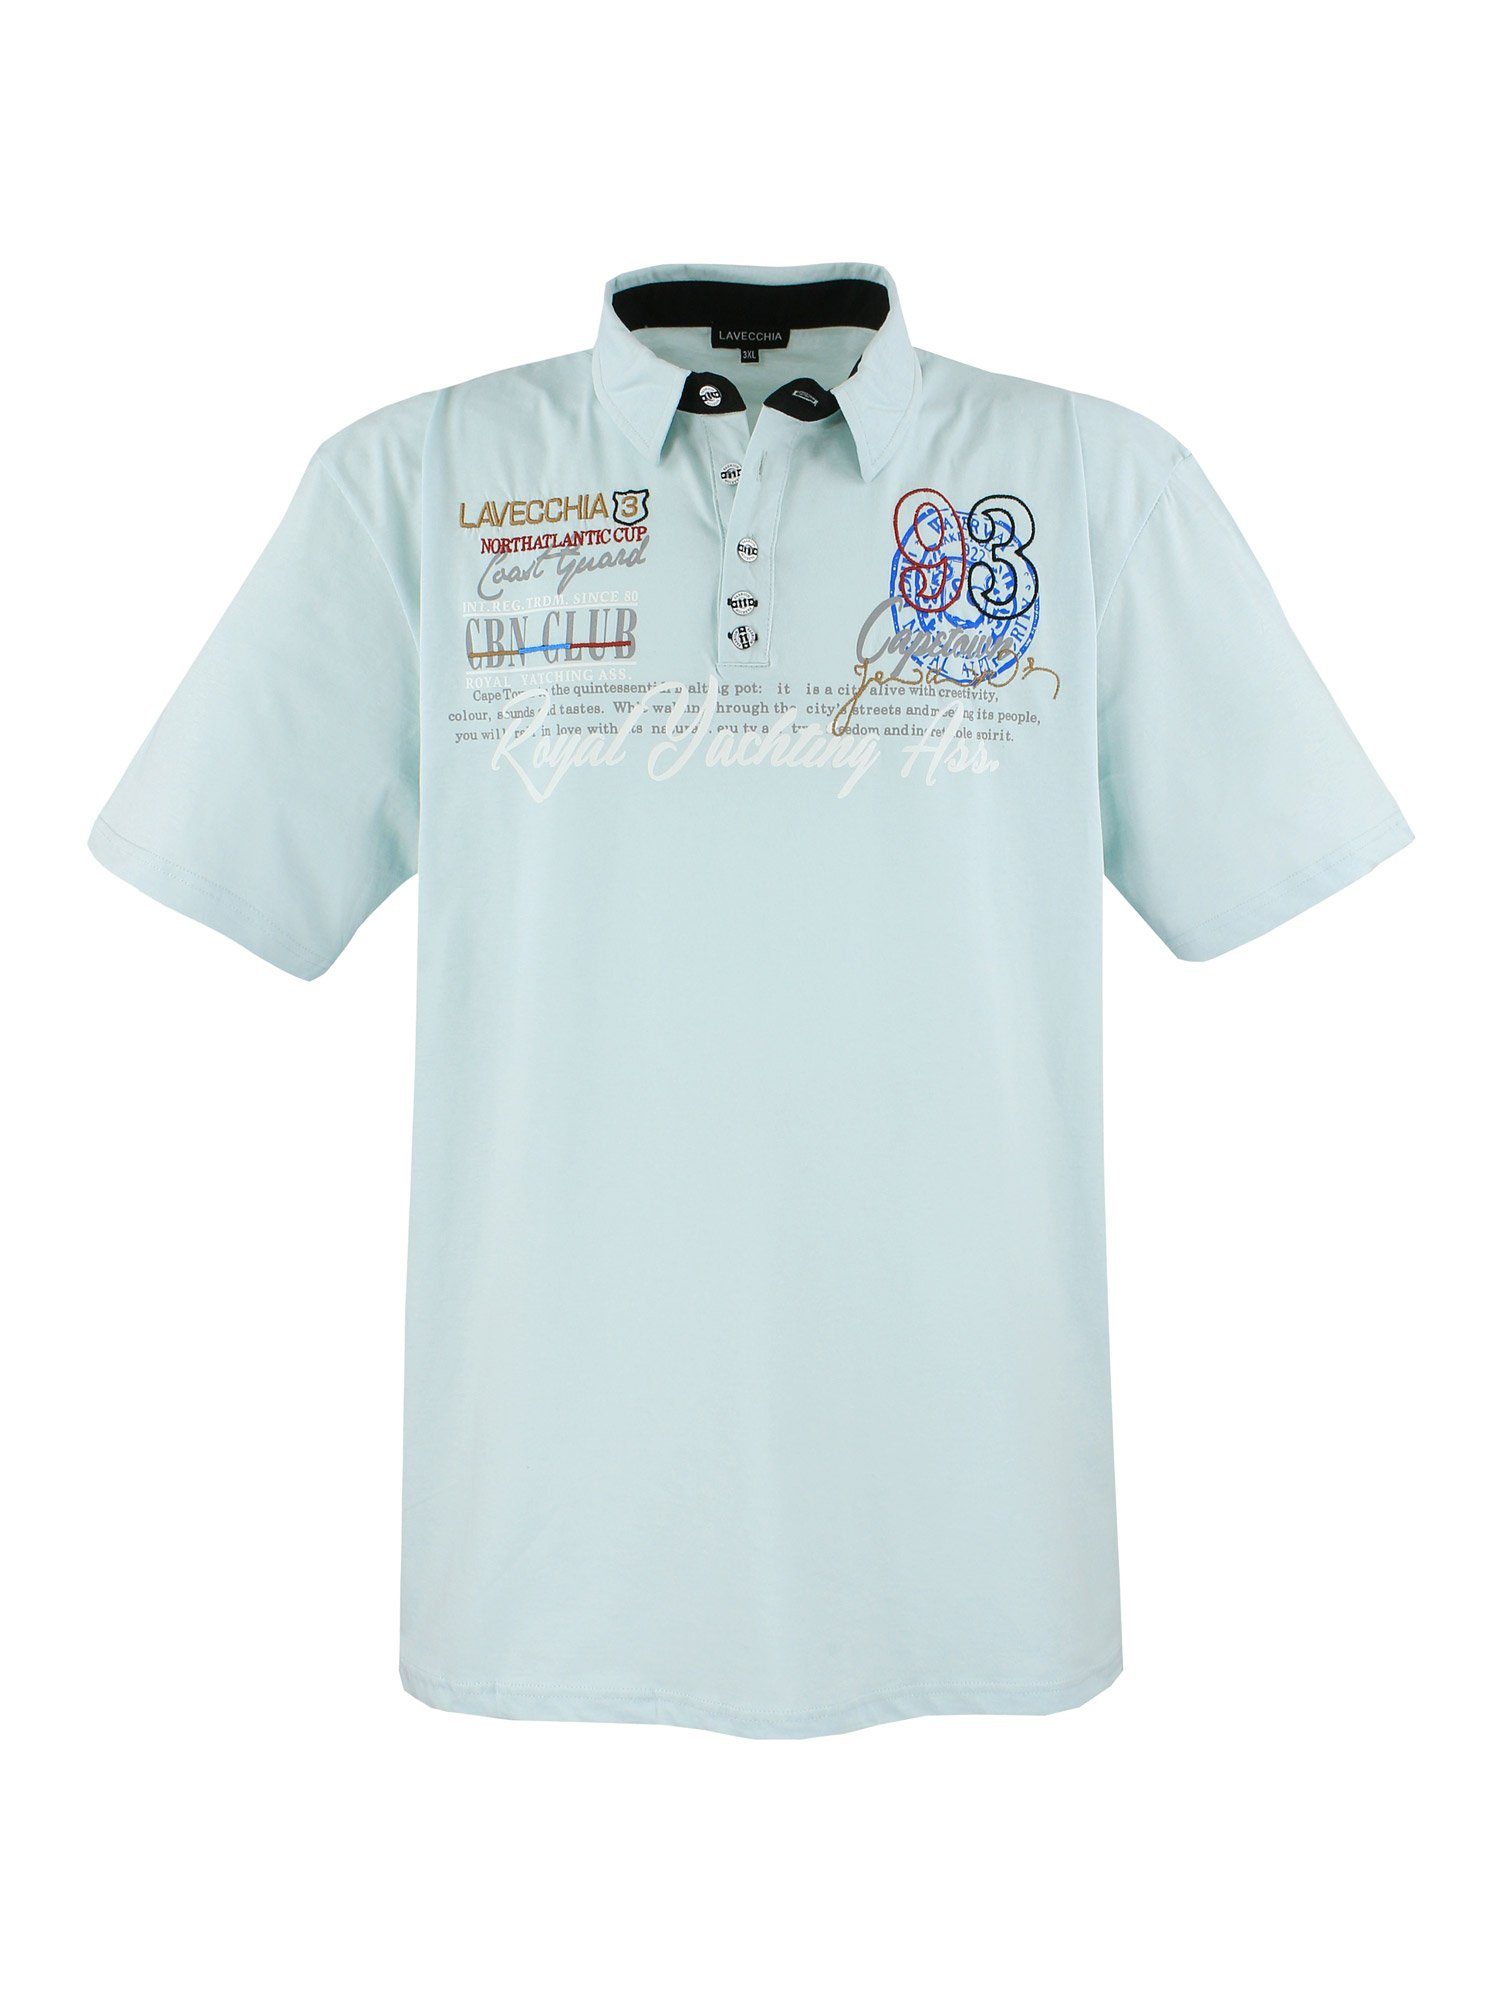 Lavecchia Poloshirt Übergrößen Herren Polo Shirt LV-4688 Herren Polo Shirt mint